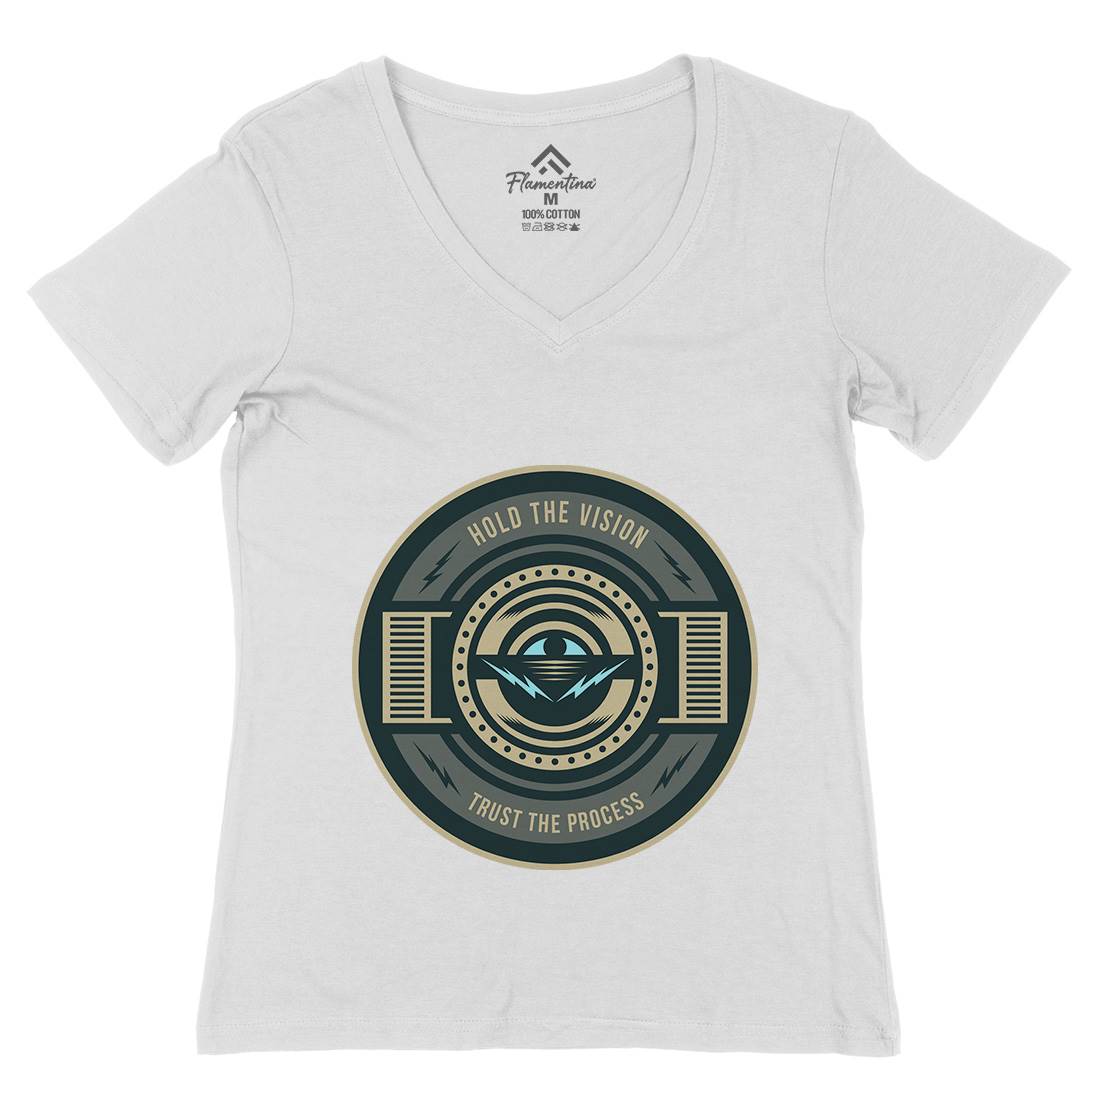 Hold The Vision Womens Organic V-Neck T-Shirt Illuminati A331